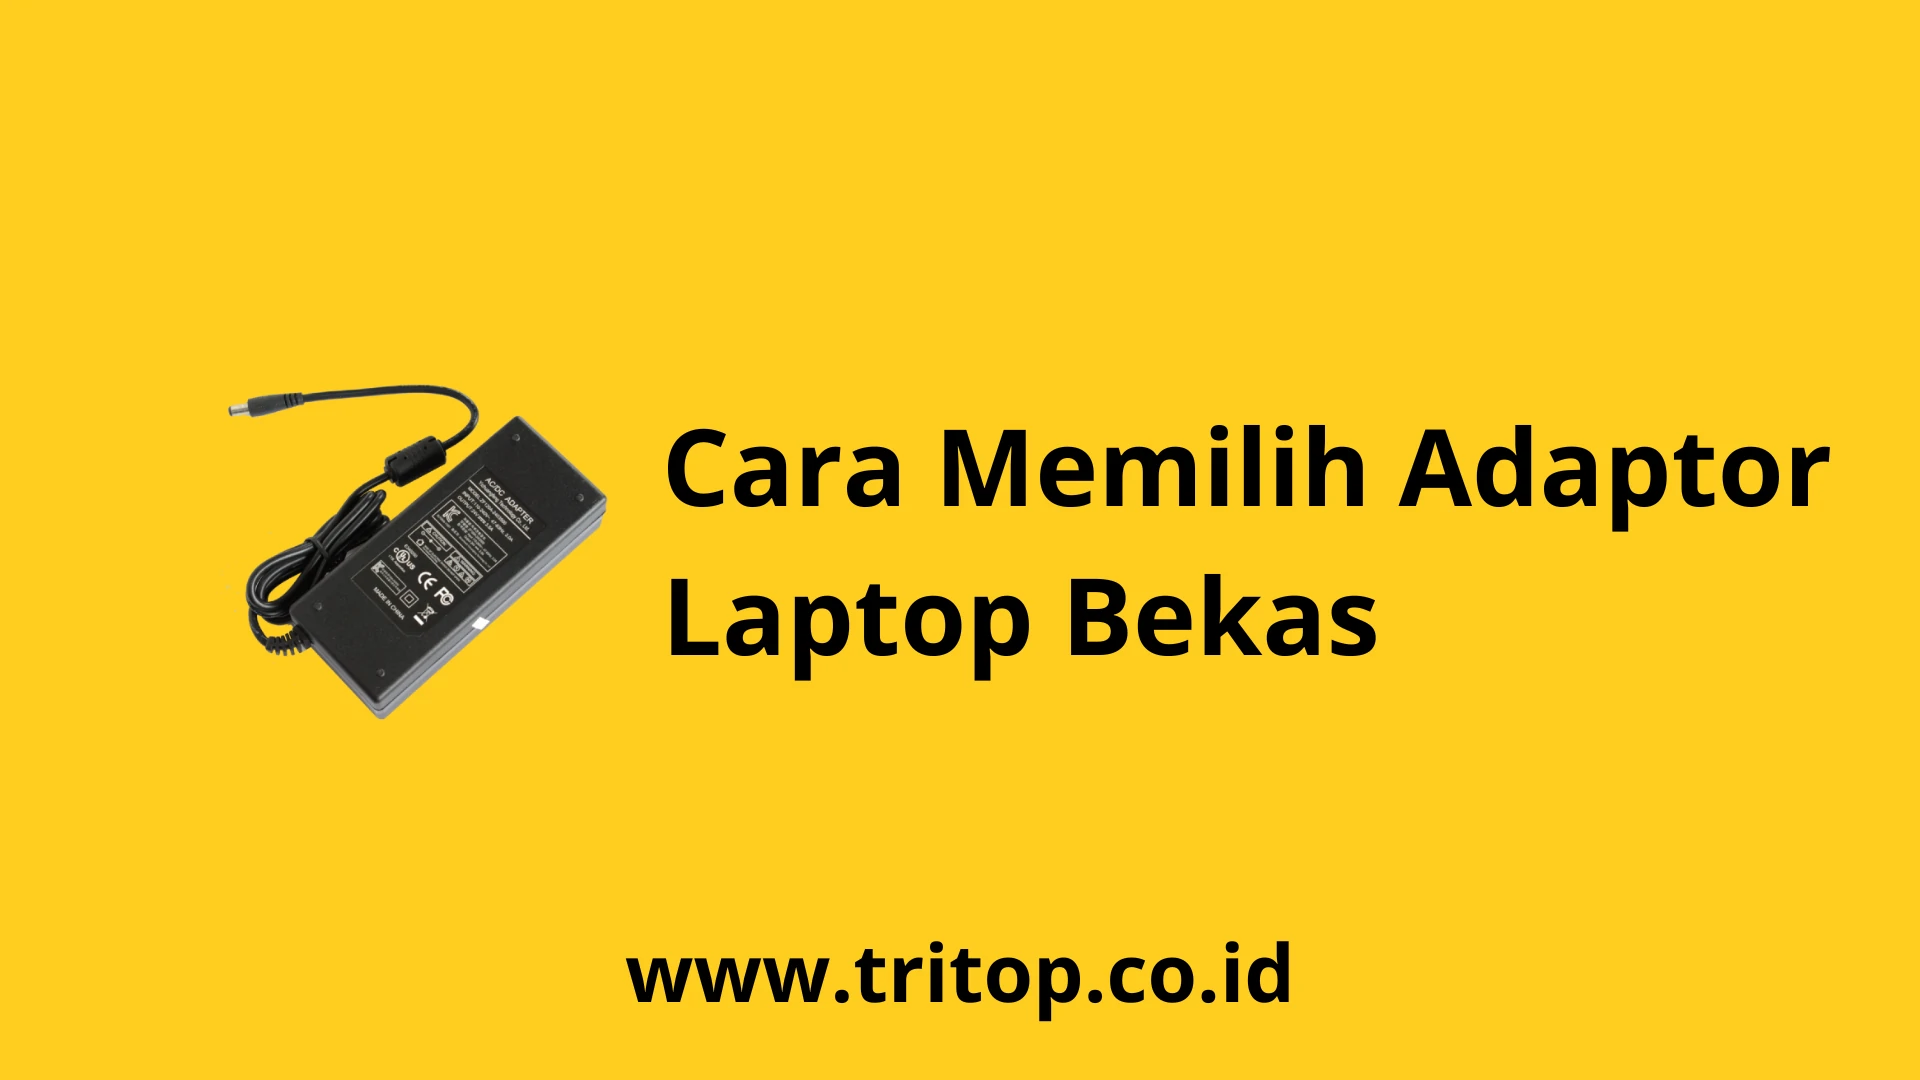 Adaptor Laptop Bekas Tritop.co.id